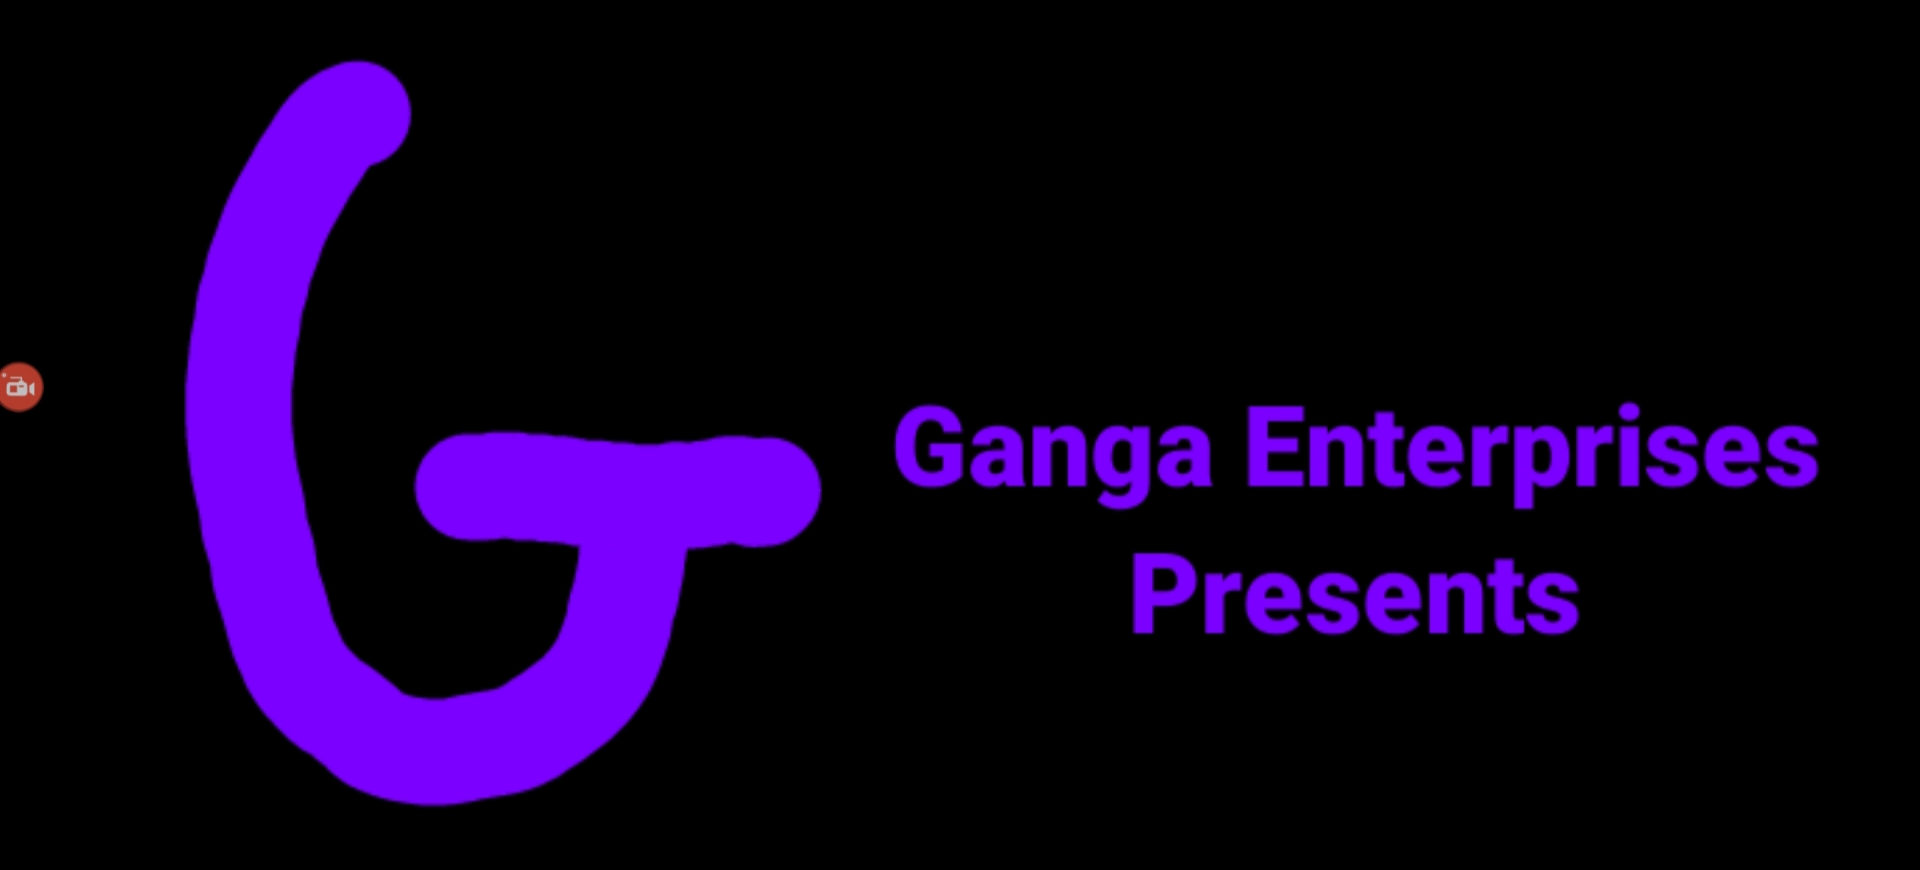 Vidhi Ganga - YouTube